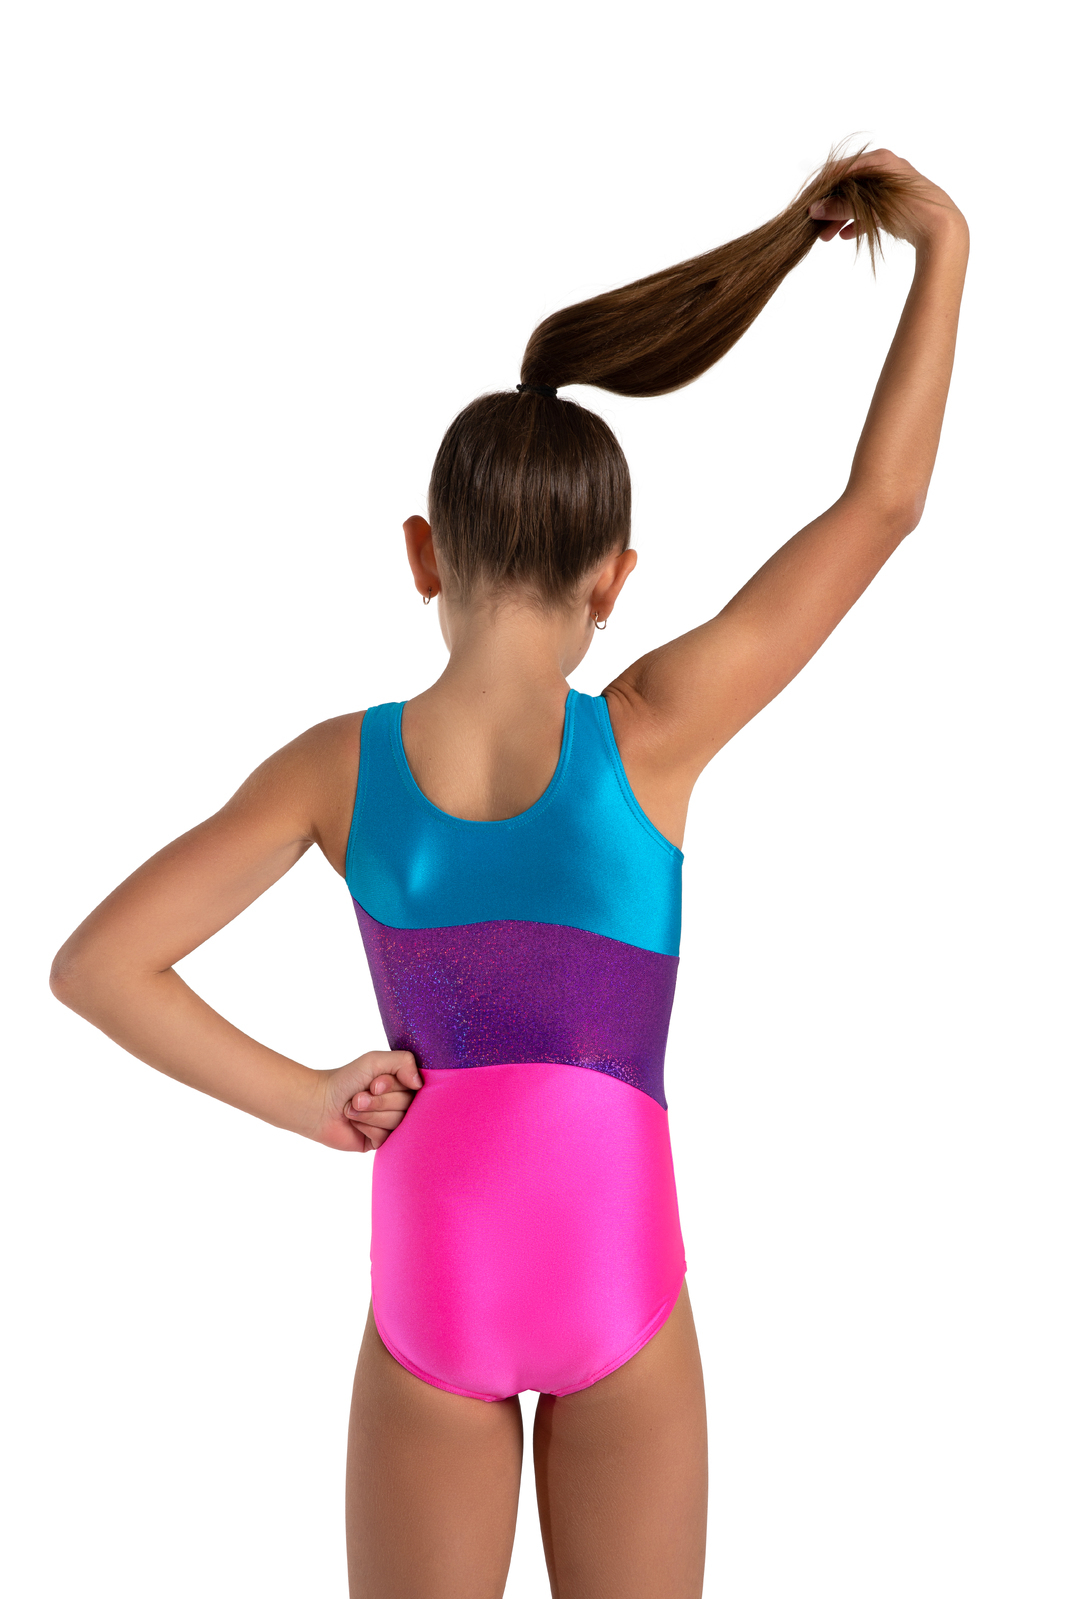 Girls Sport Shorts Australia - Activewear & Sportswear for gymnastics,  athletics and dance - Chasing Oso